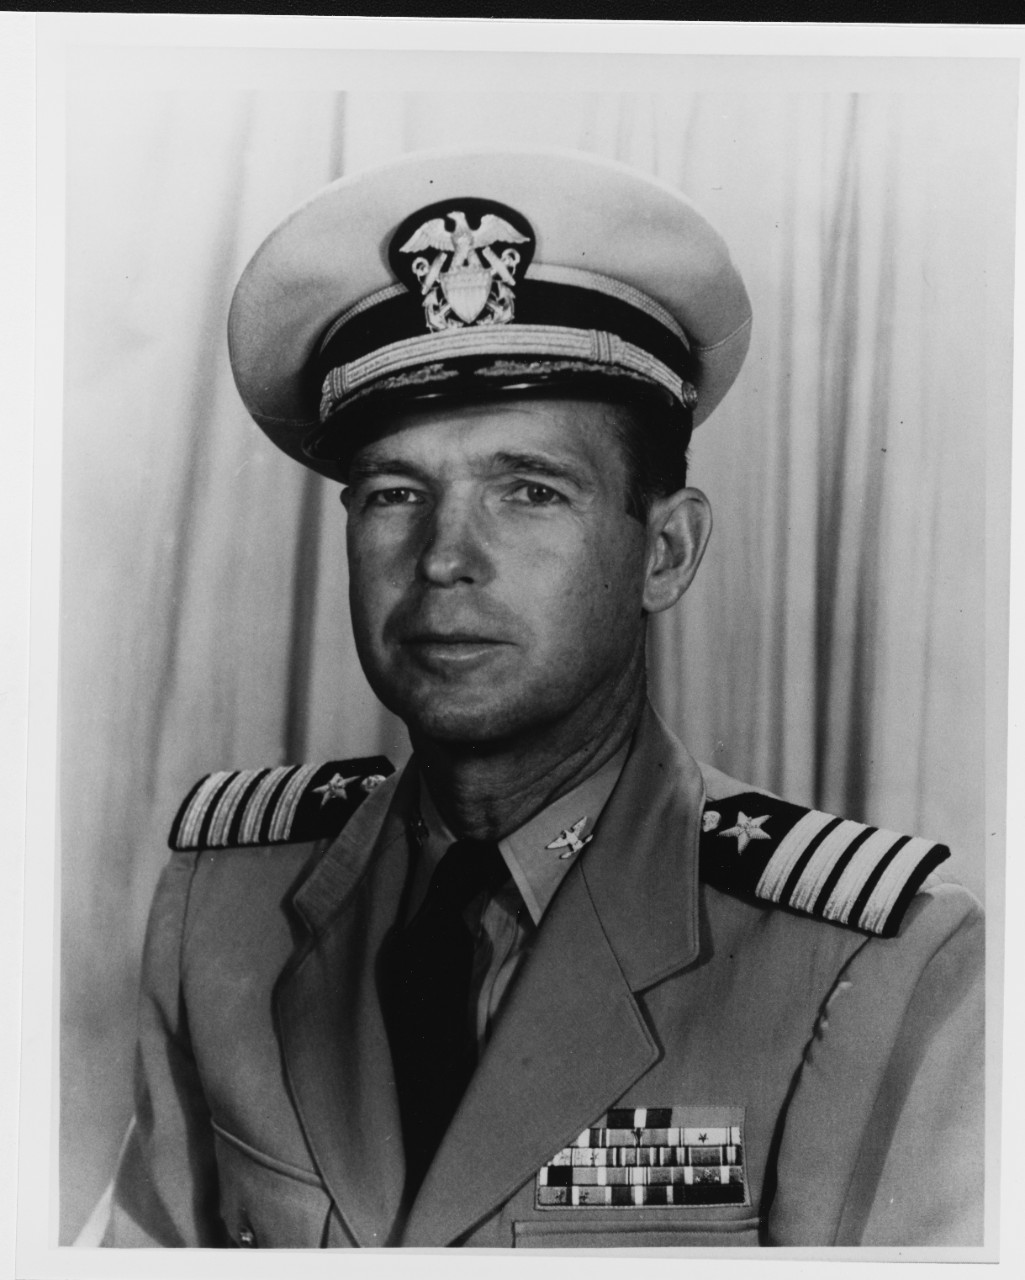 Captain Barry K. Atkins, USN